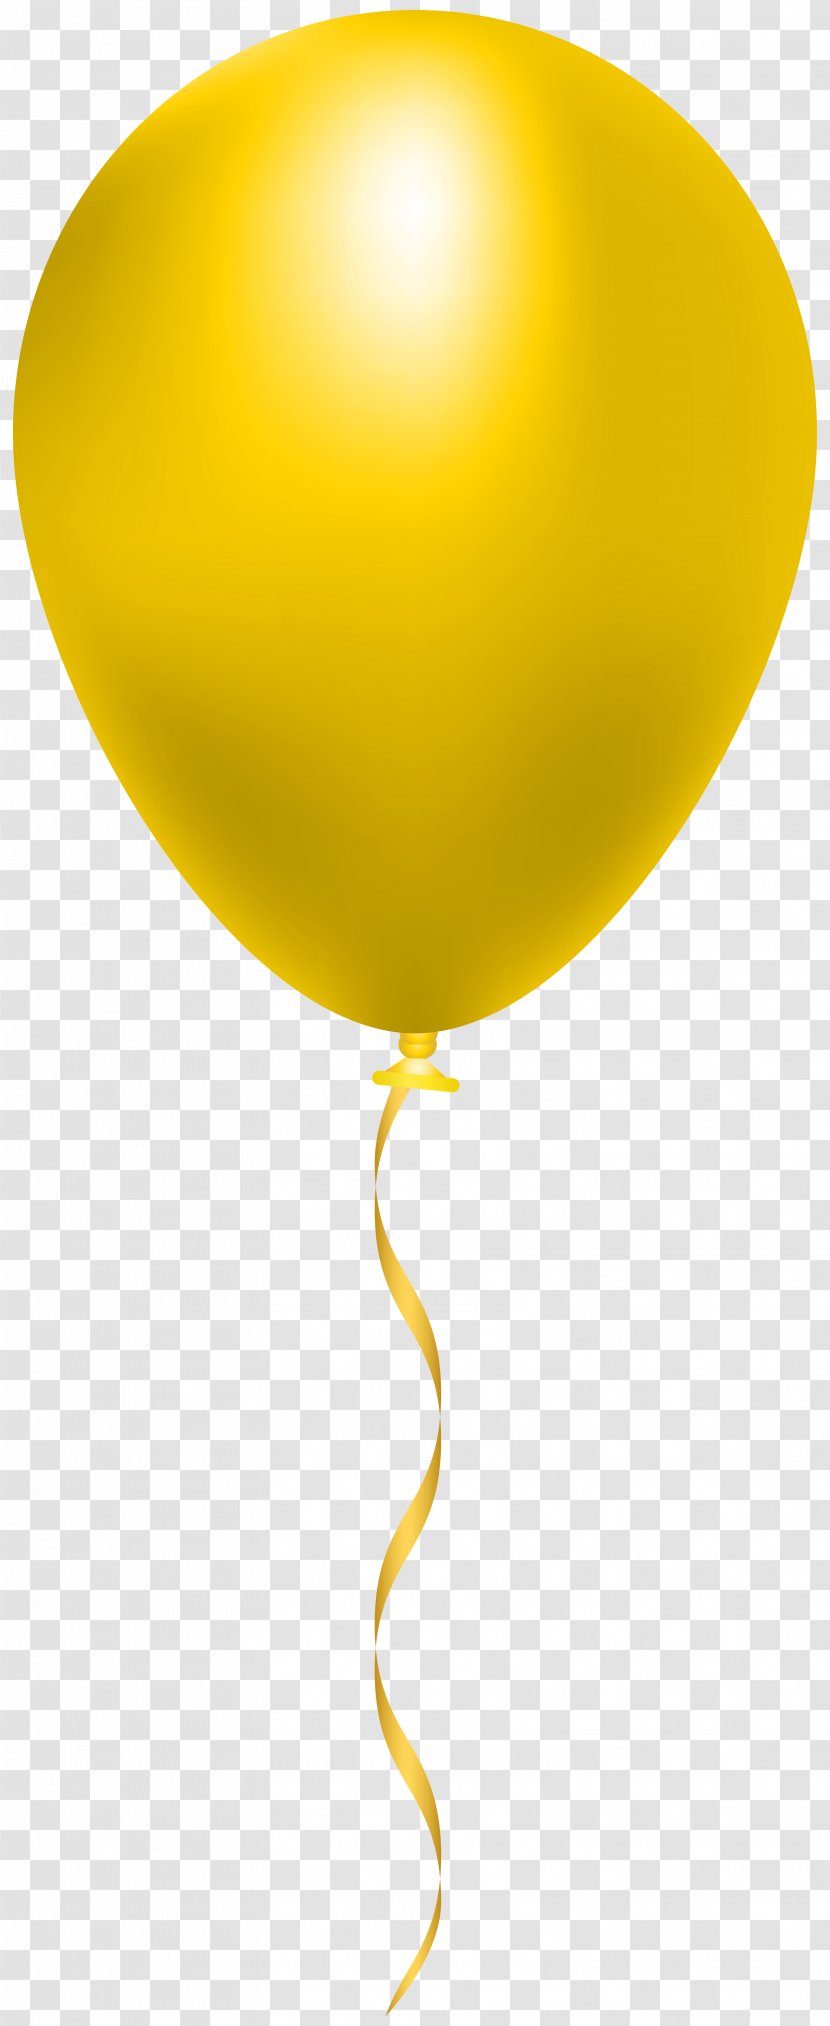 Balloon Clip Art Image JPEG Transparent PNG